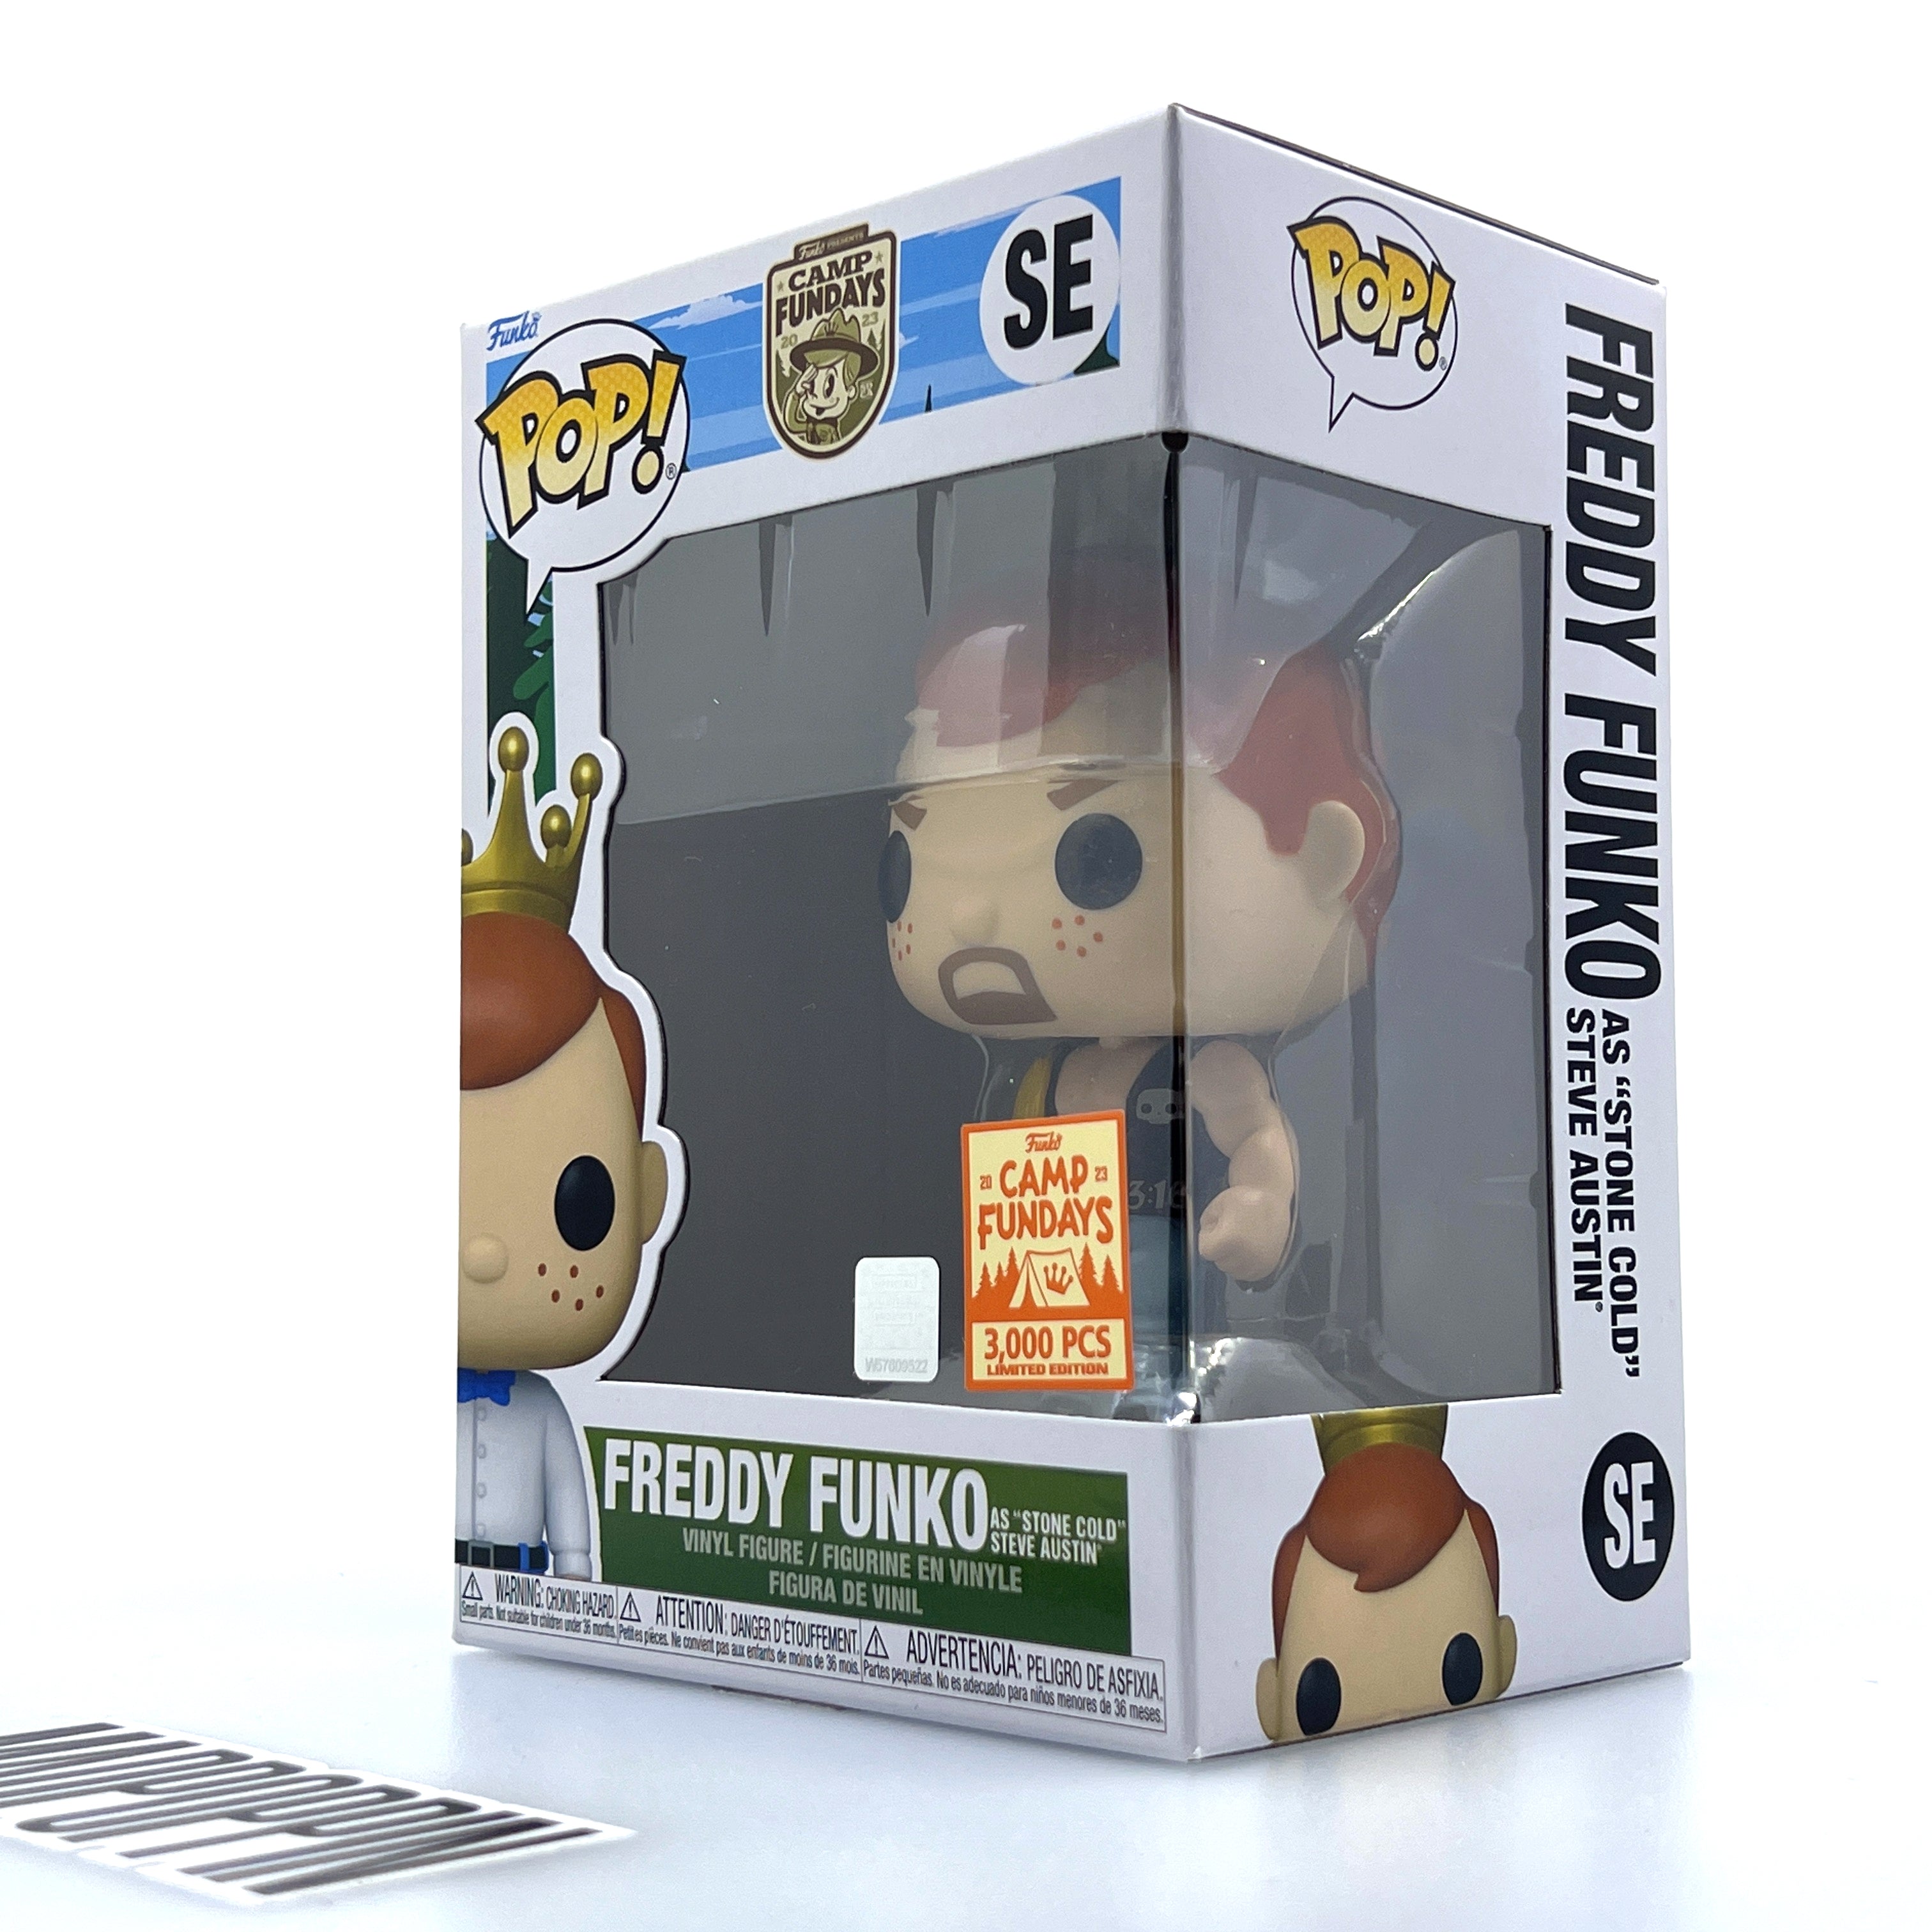 Funko Pop Camp Fundays Freddy Funko as Stone Cold Steve Austin LE 3000 Pcs SE